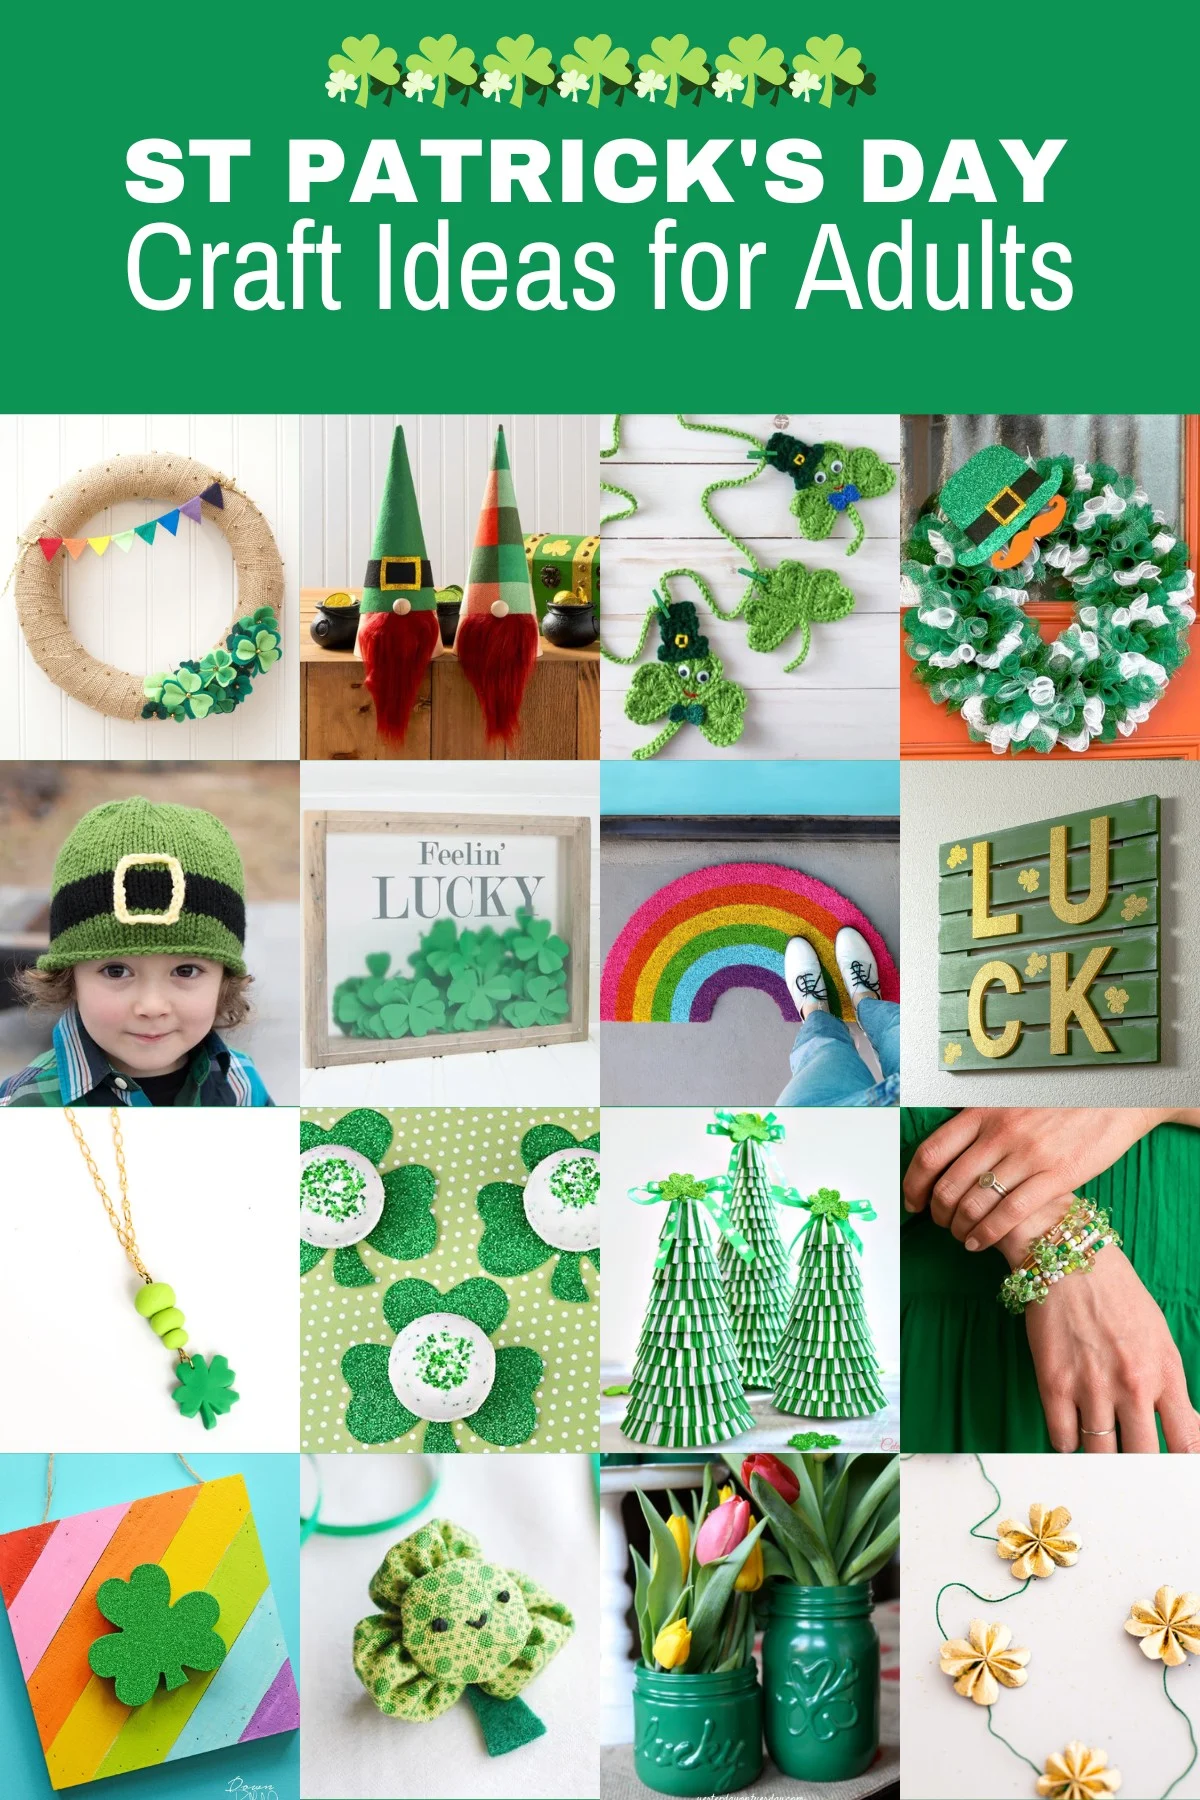 St Patrick's Day Crafts for Adults - Mod Podge Rocks